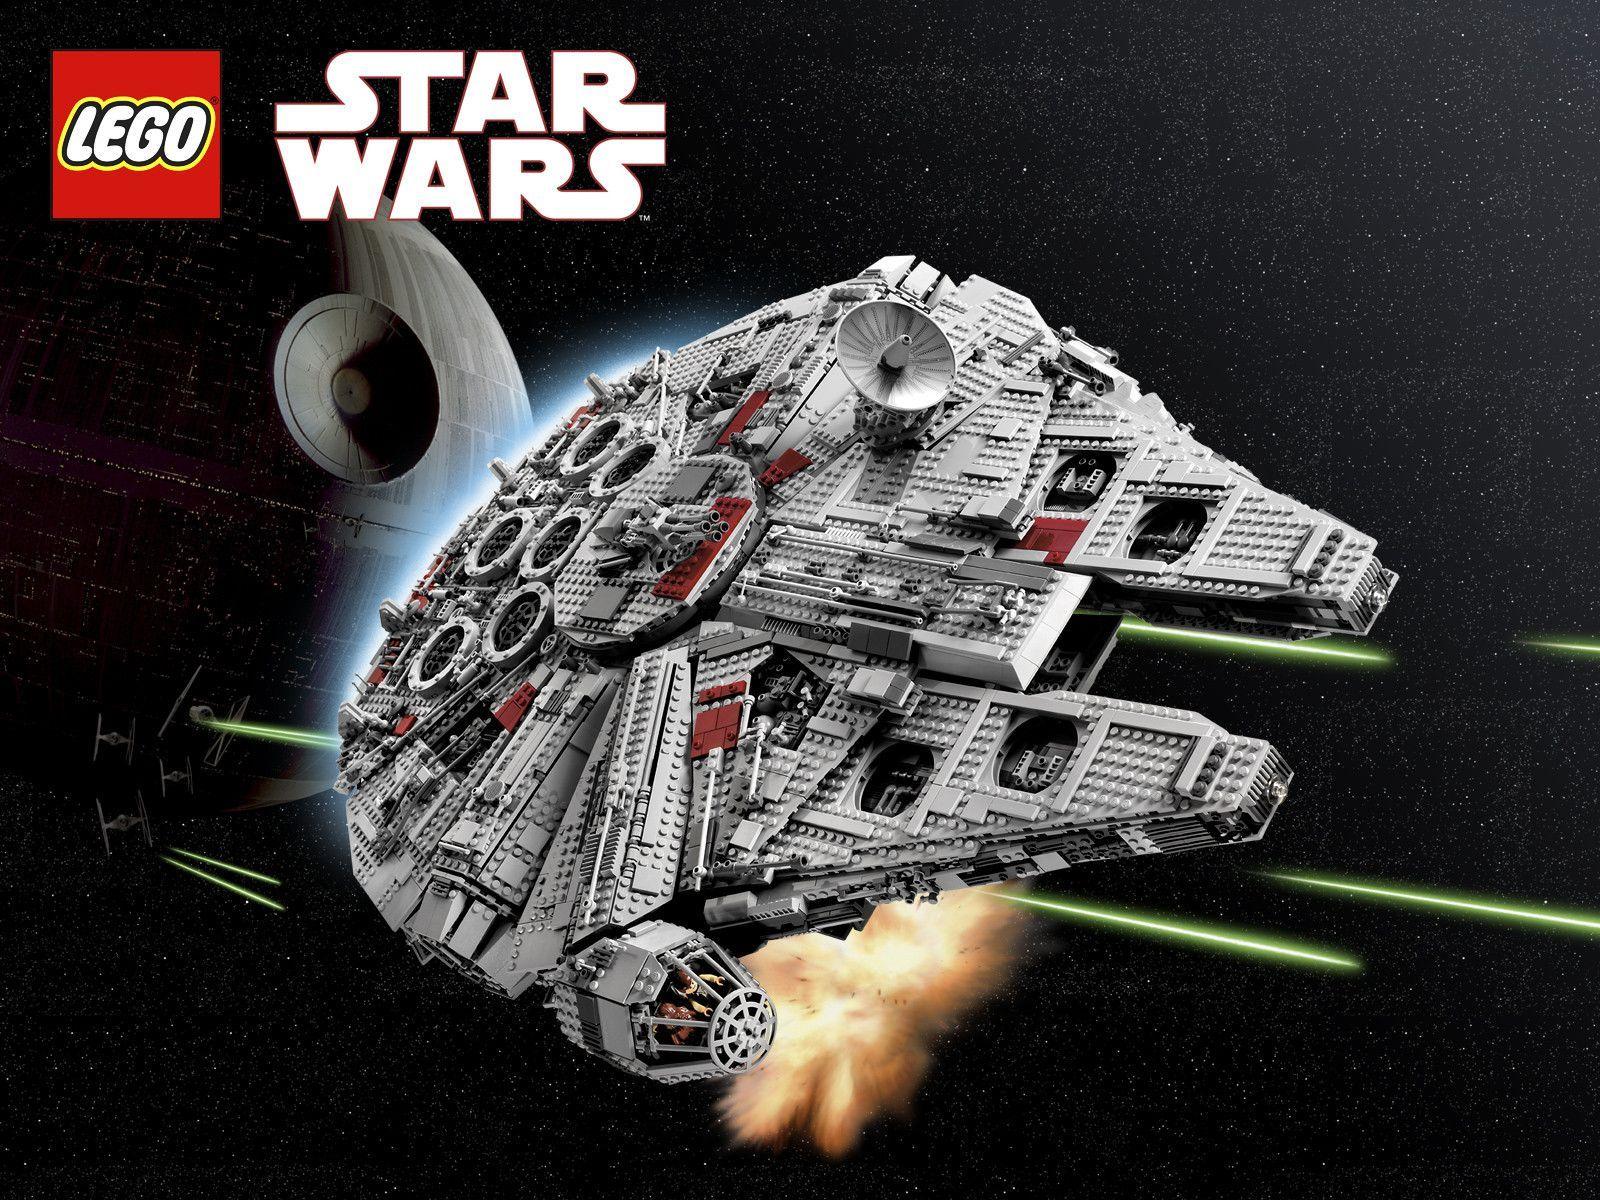 Lego Star Wars TheWallpaper. Free Desktop Wallpaper for HD